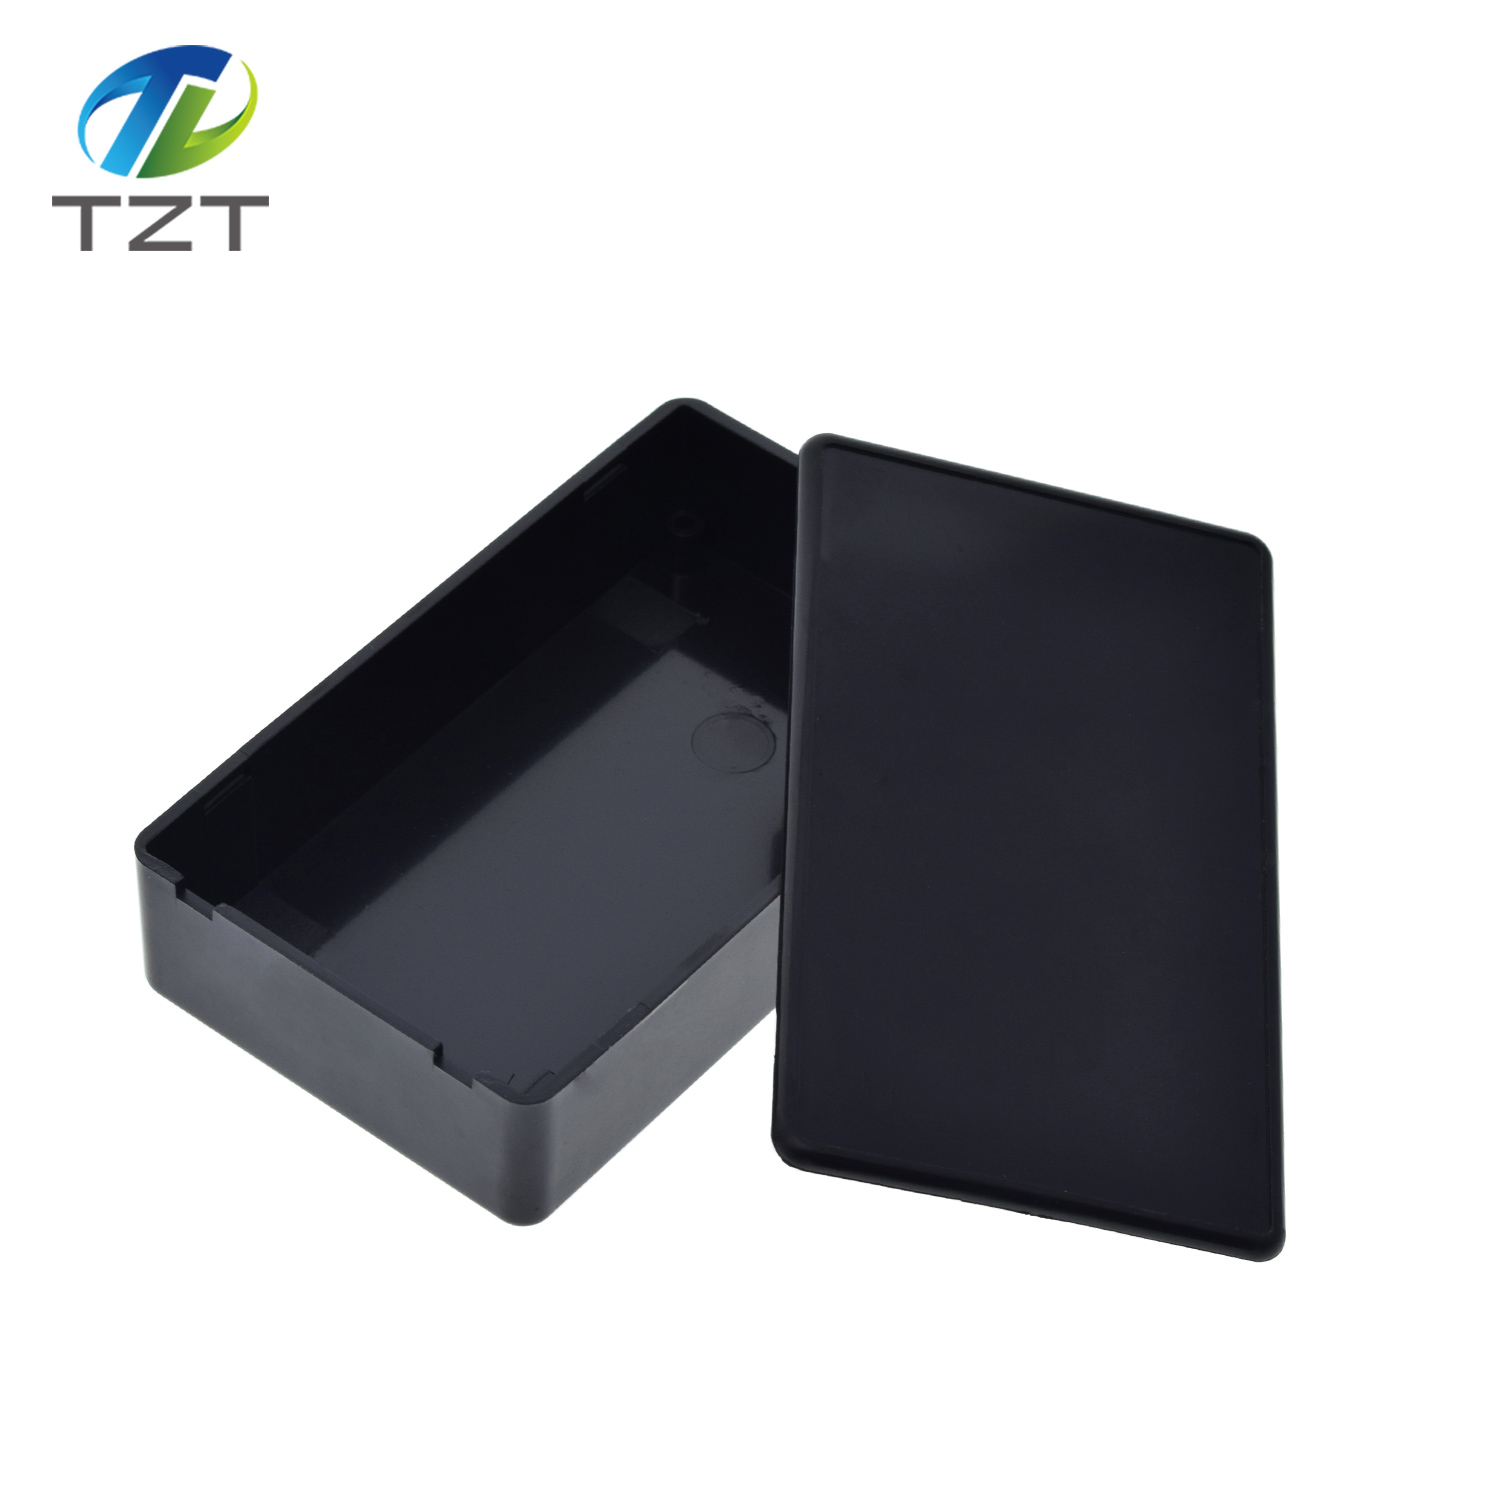 TZT New ABS DIY Plastic Electronic Project Box Enclosure Instrument 100x60x25mm VE834 P